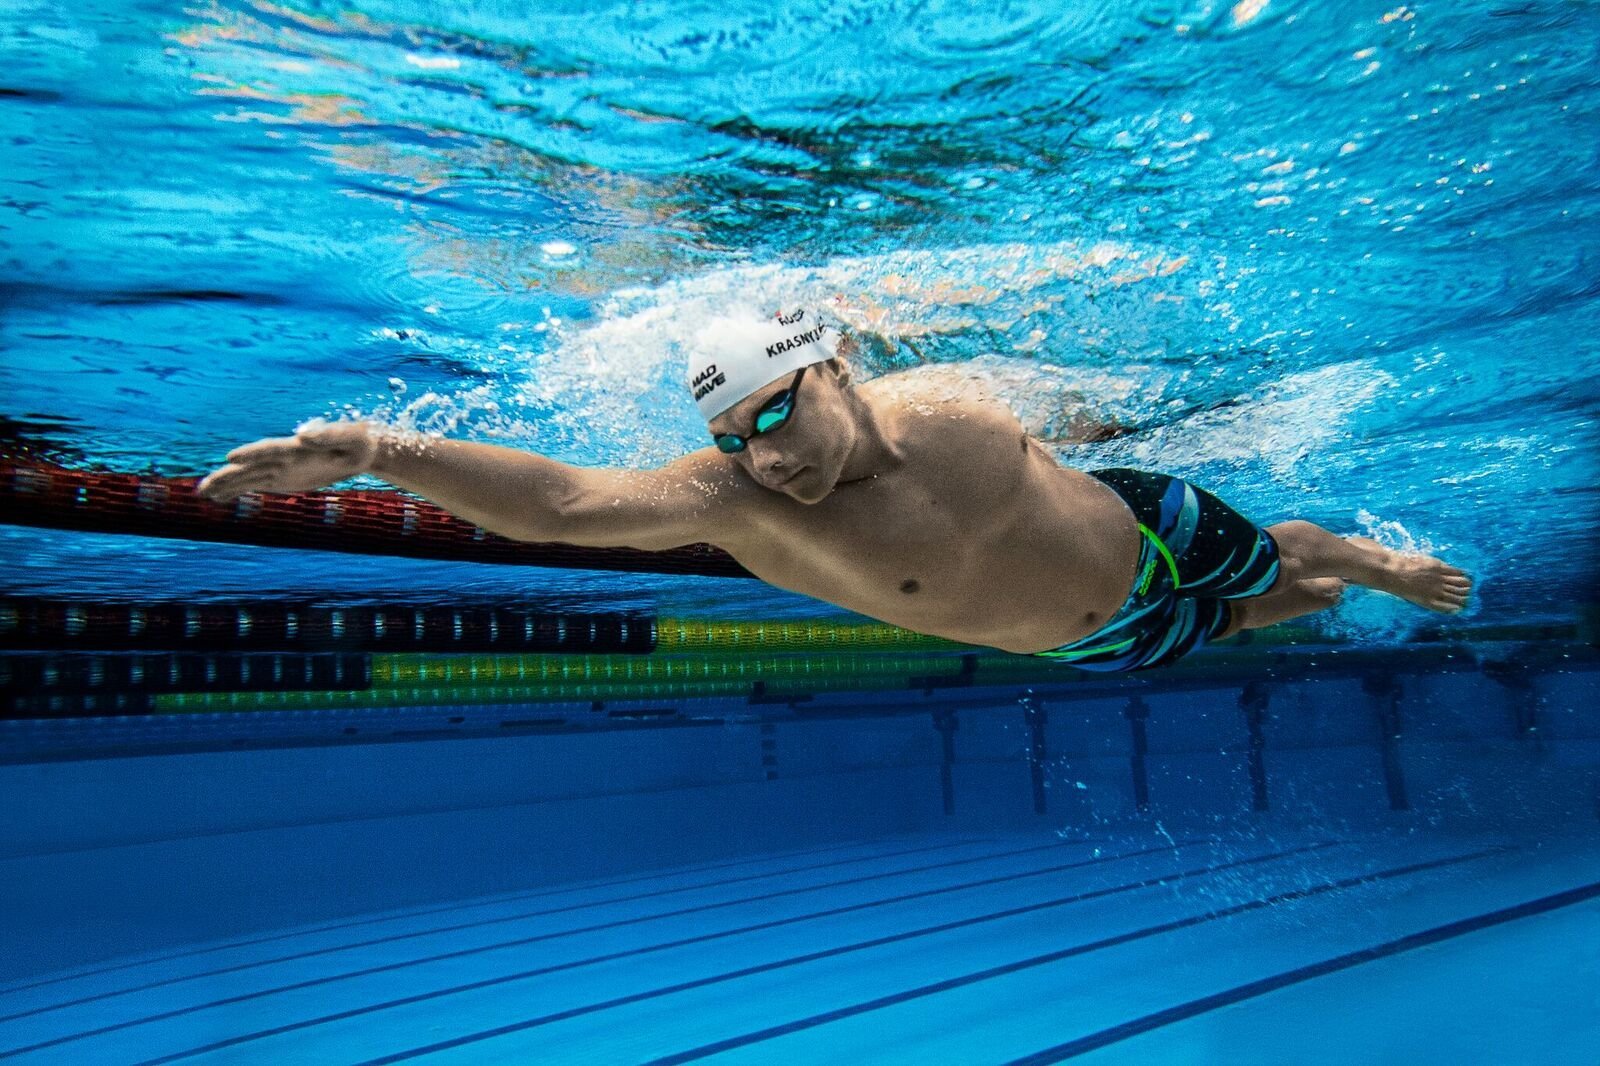 Спортсмен занимающийся плаванием